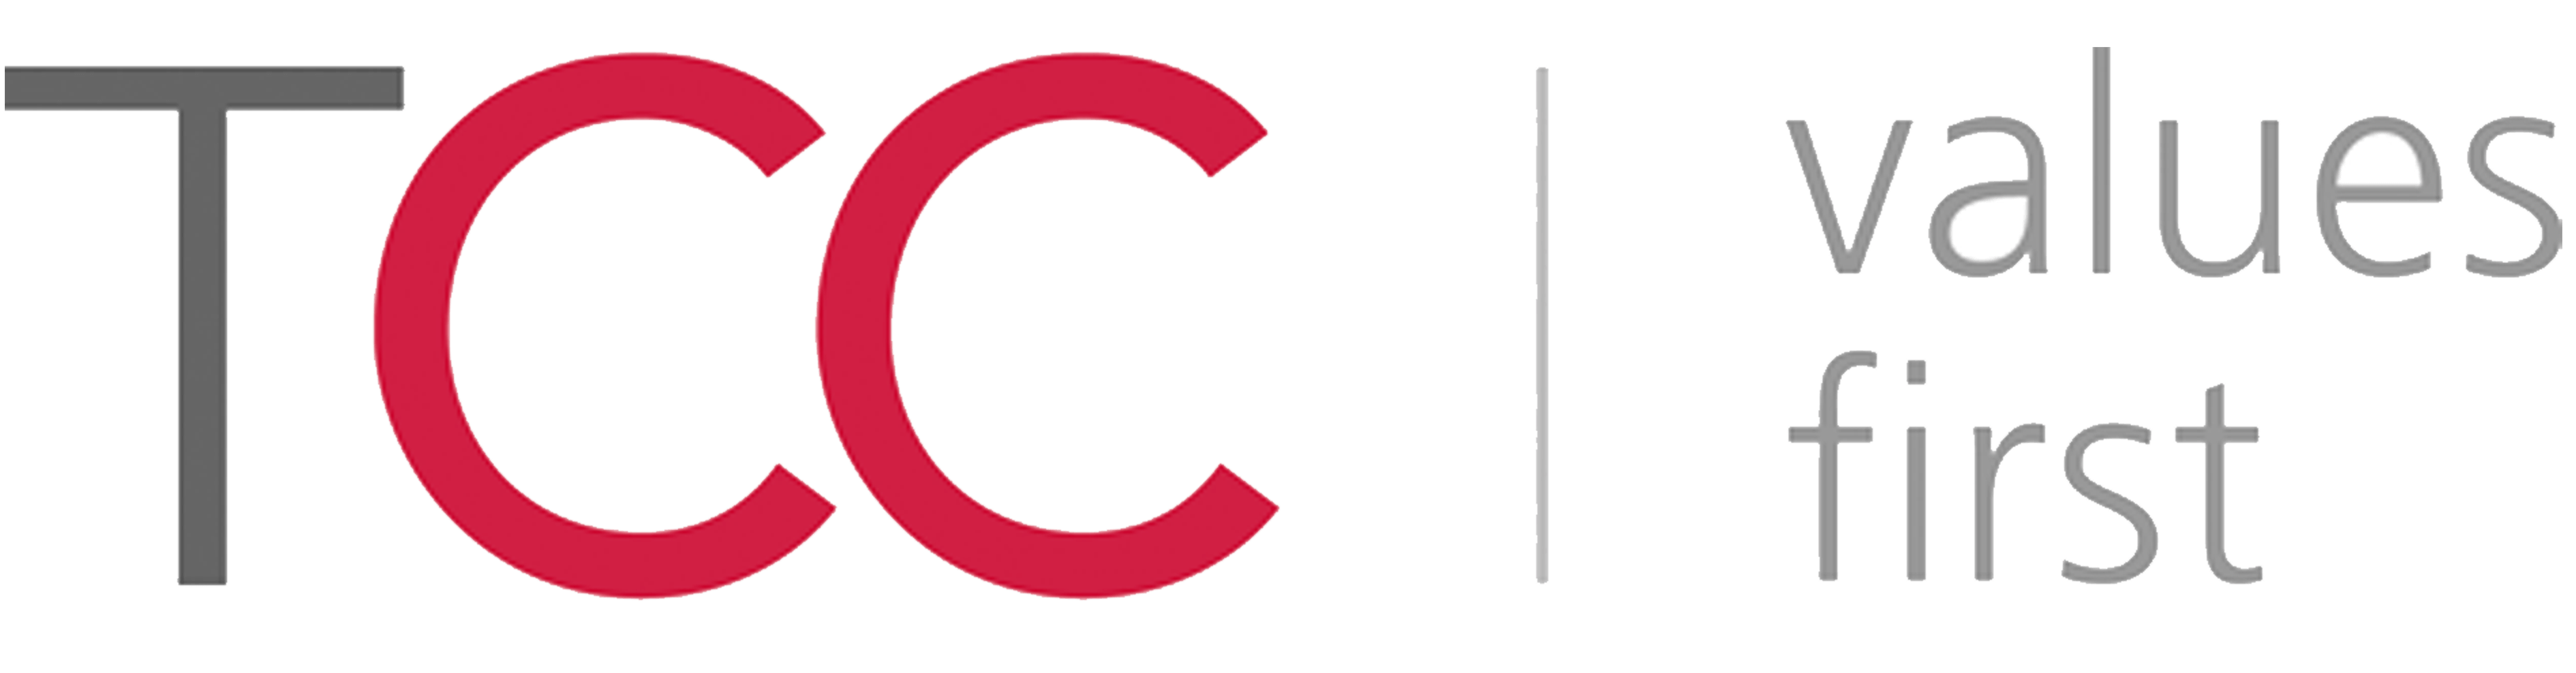 TCC Logo - The Campaign Company